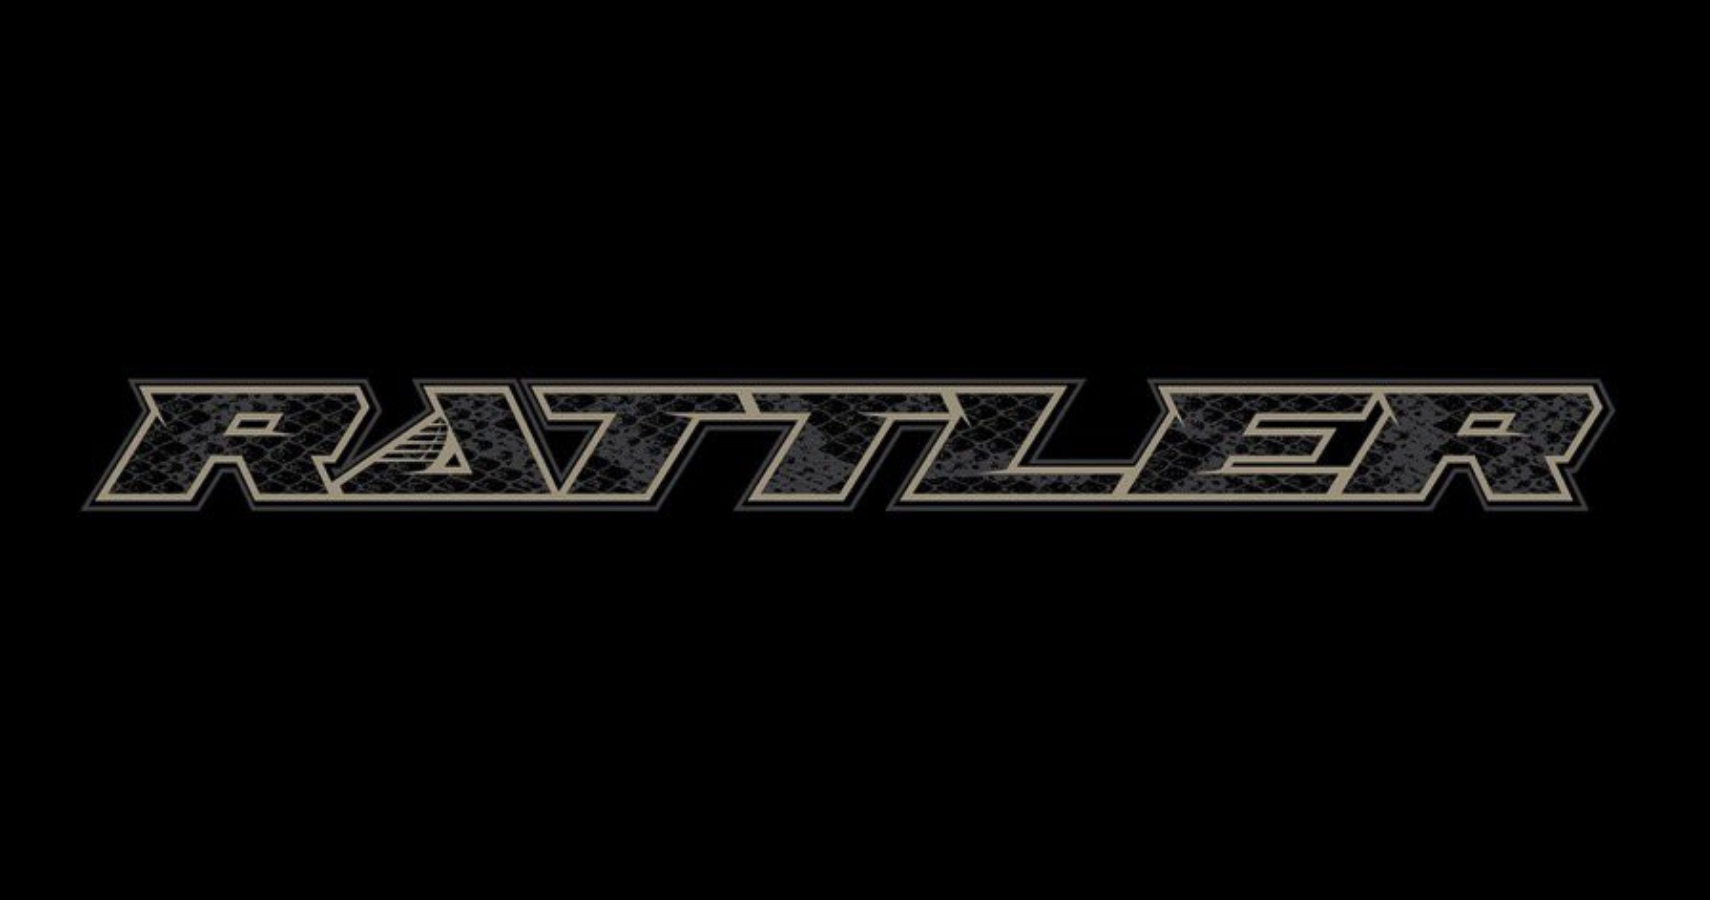 Rattler logo with black background